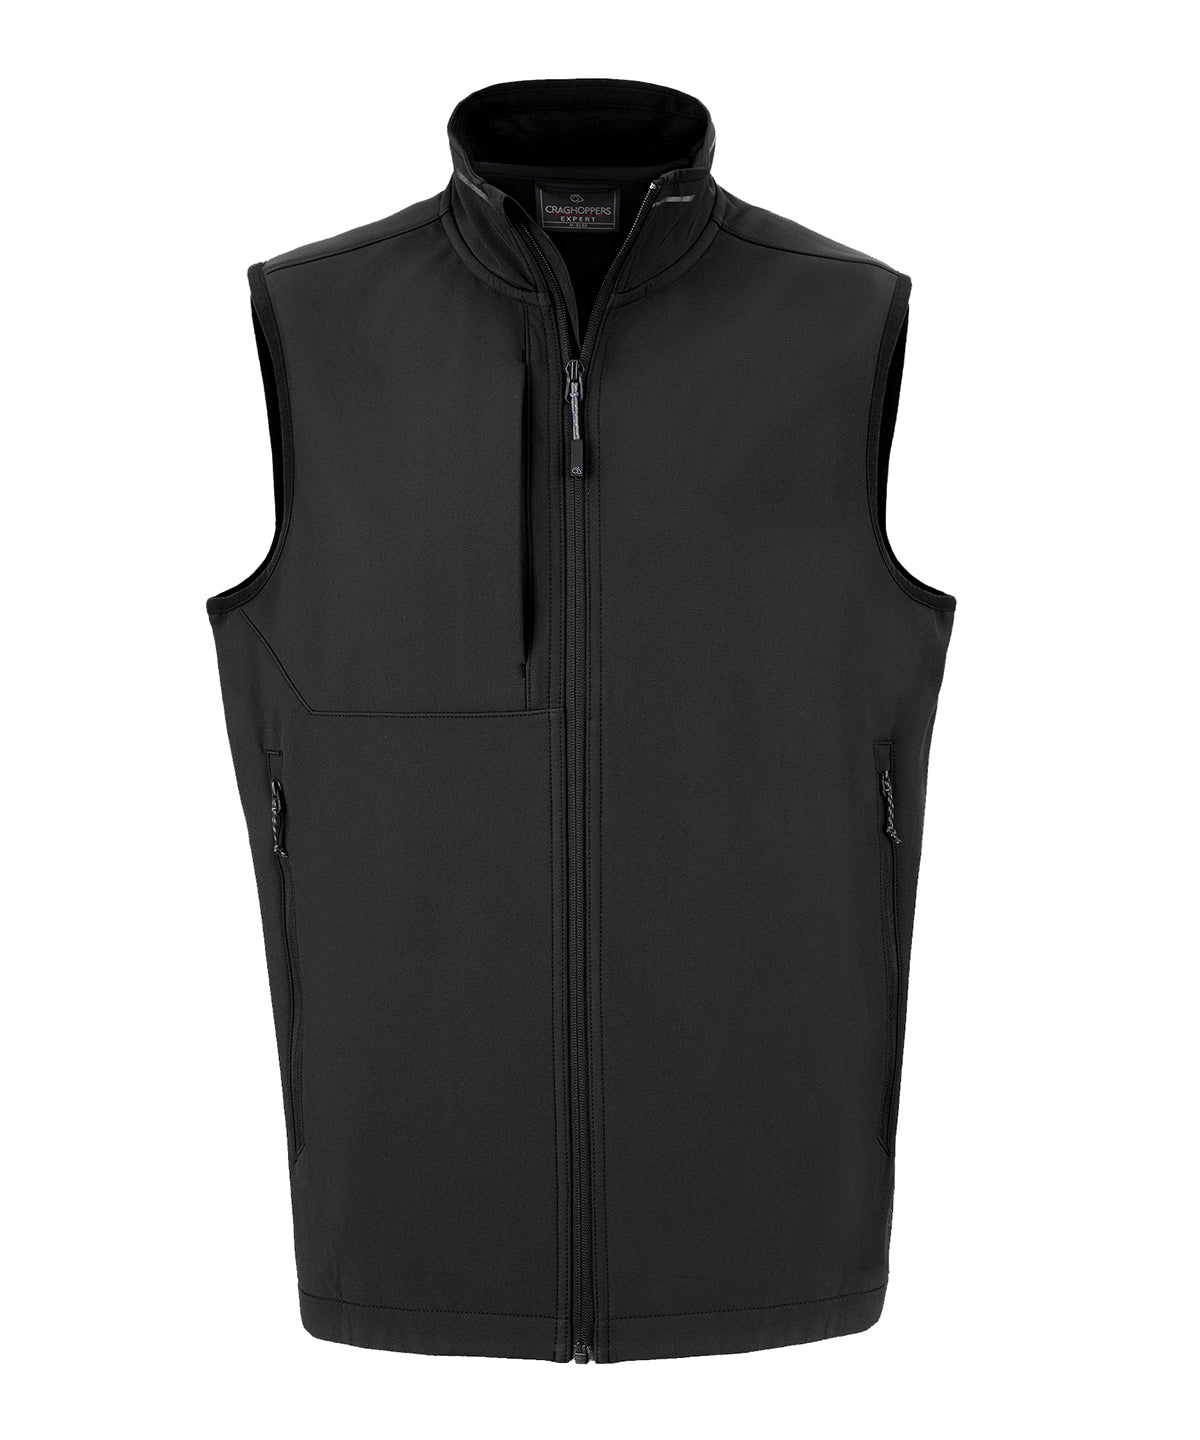 Personalised Body Warmers - Black Craghoppers Expert Basecamp softshell vest